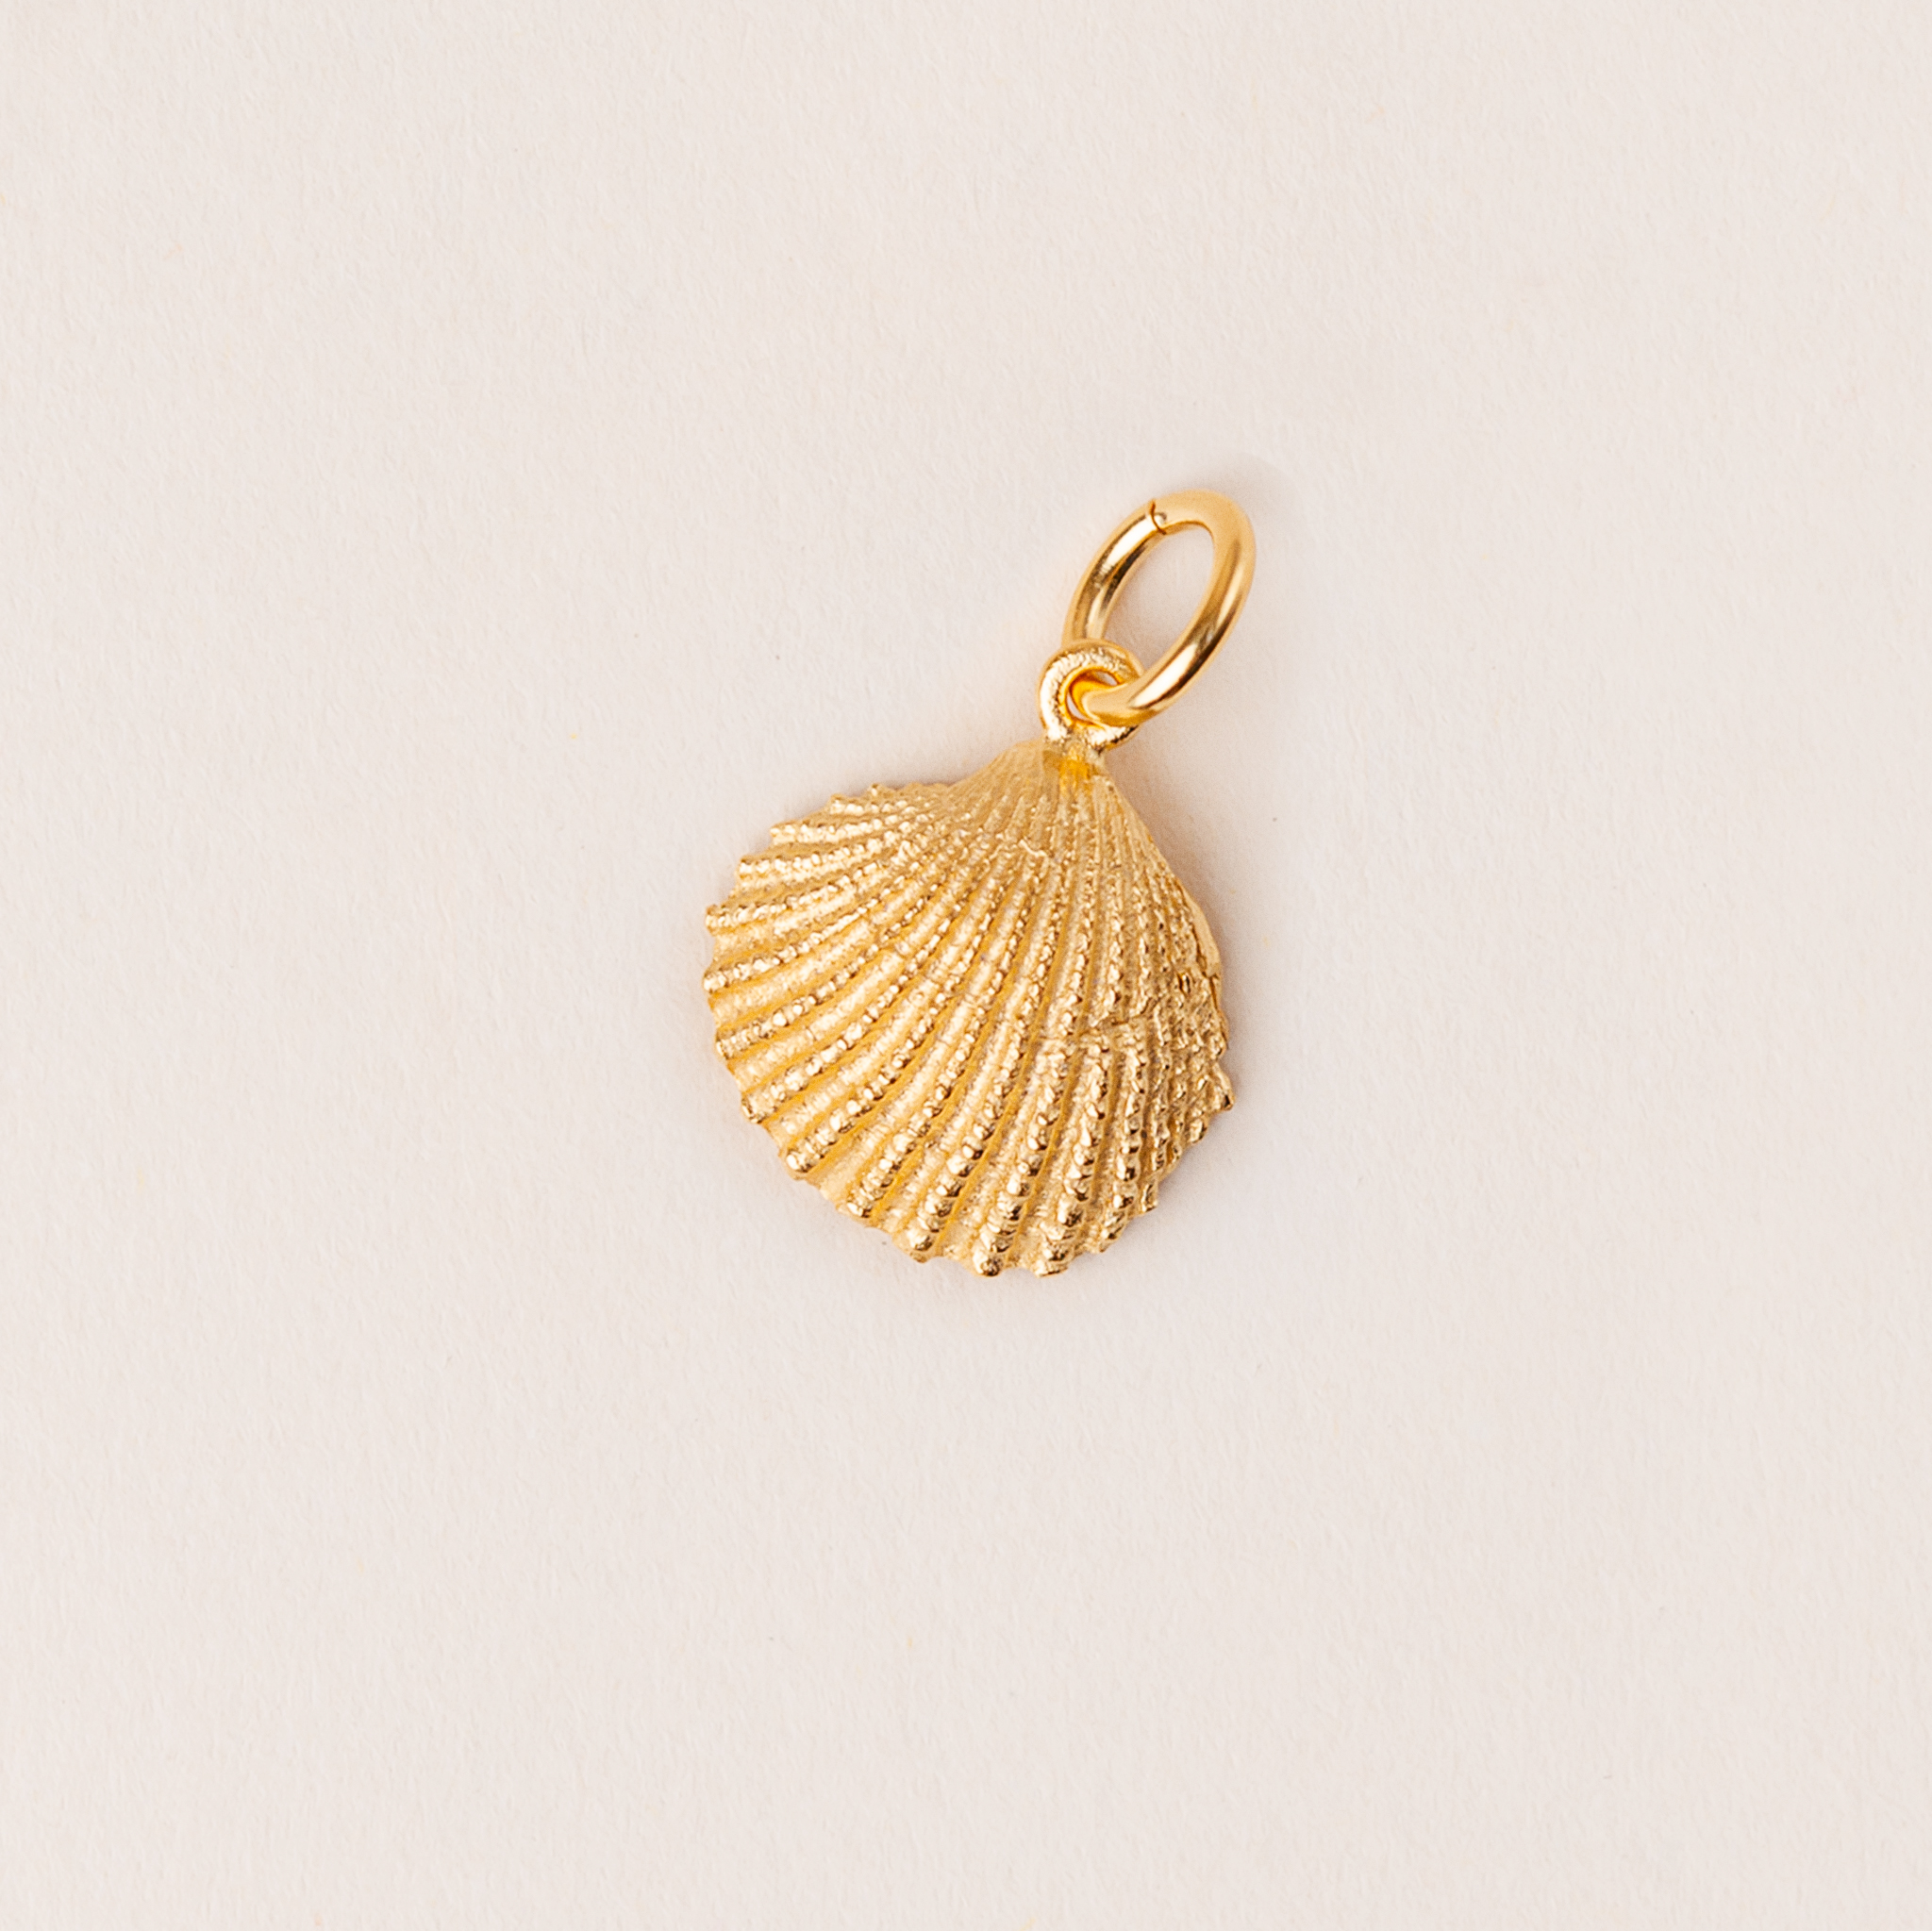 Small Shell pendant